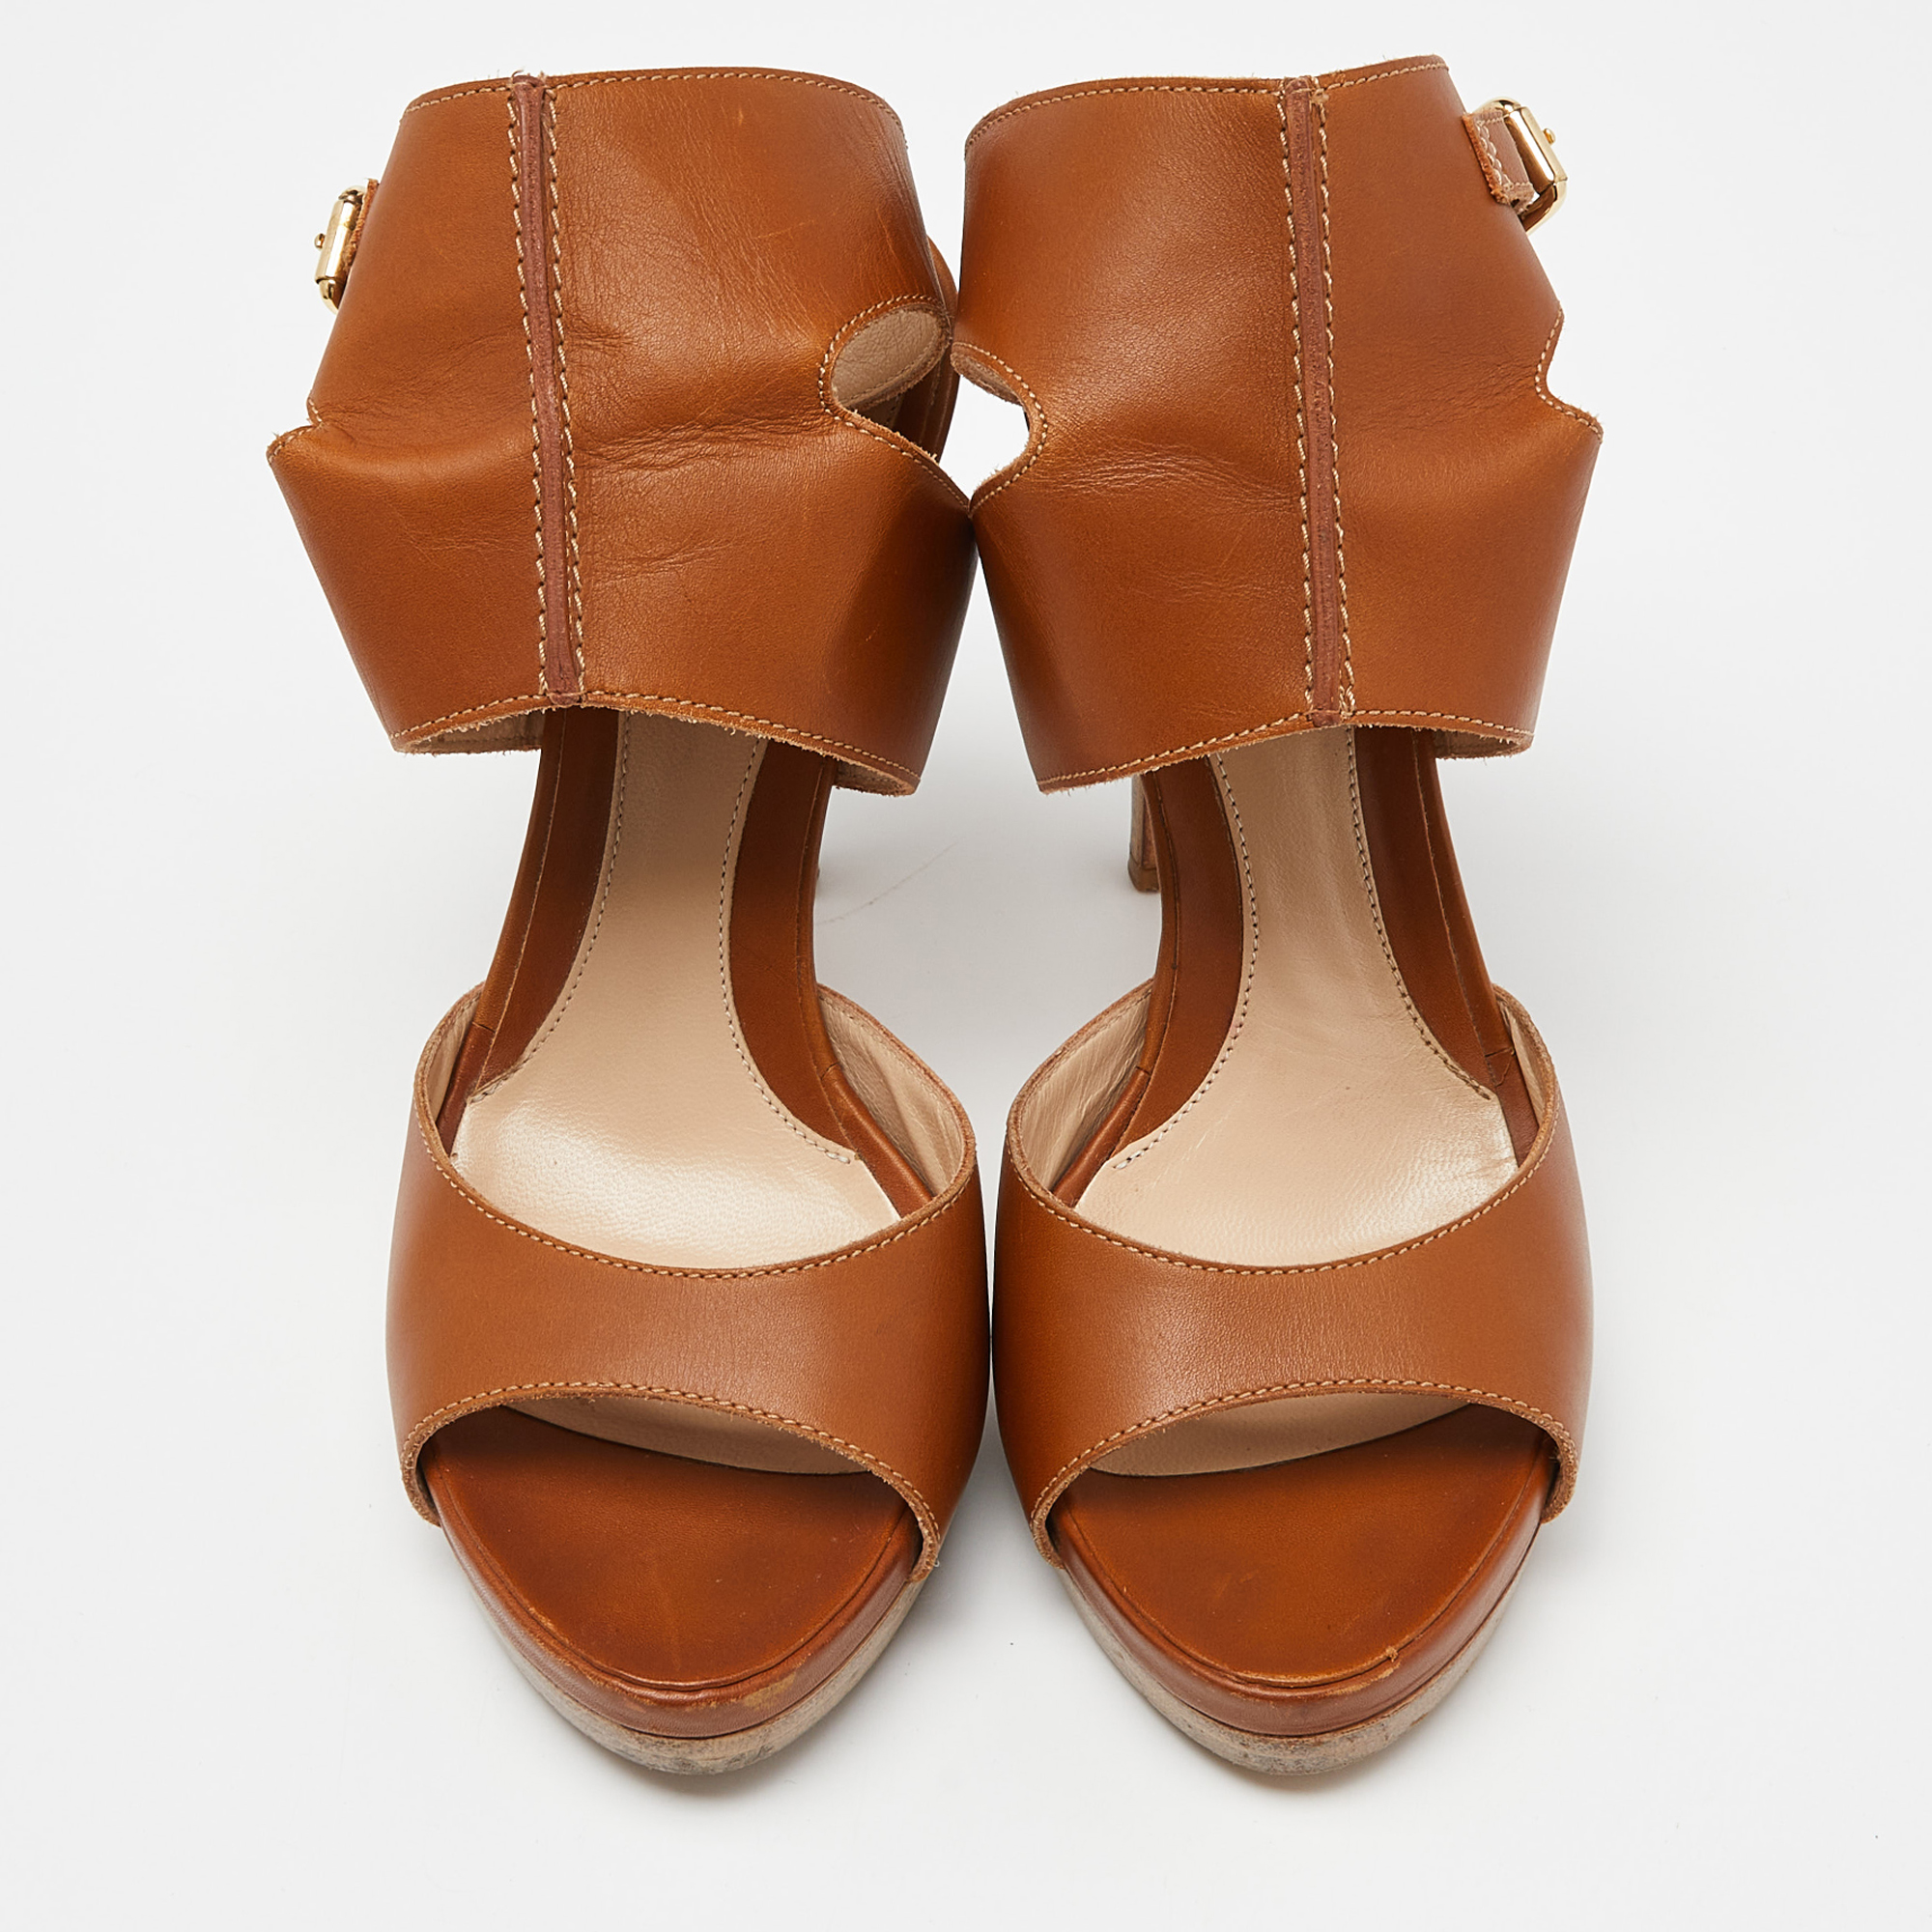 Fendi Brown Leather Ankle Strap Platform Sandals Size 38.5